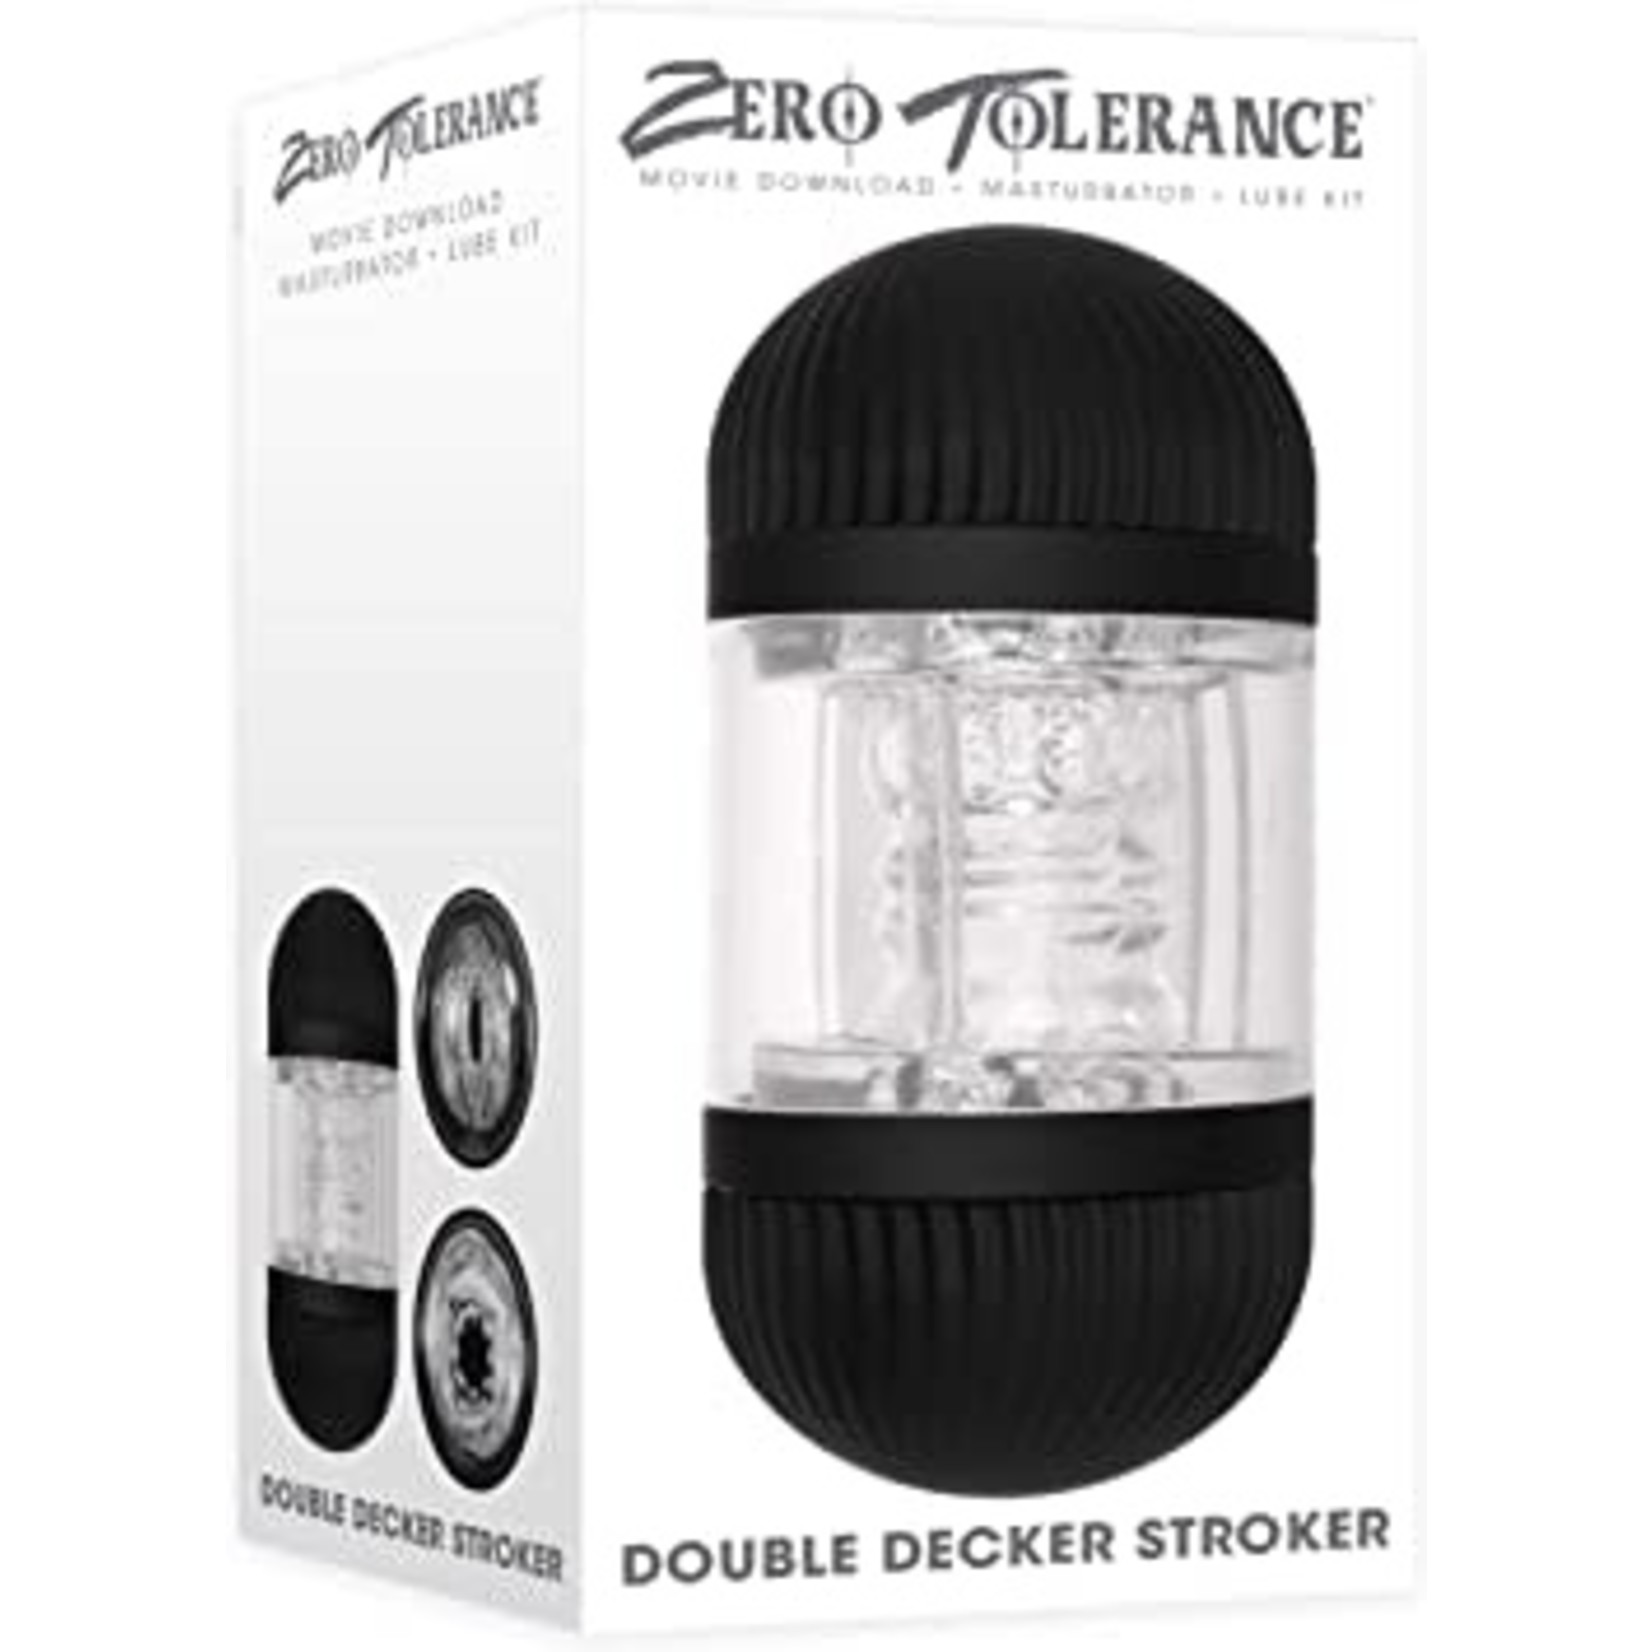 Zero Tolerance Double Decker Stroker - Black